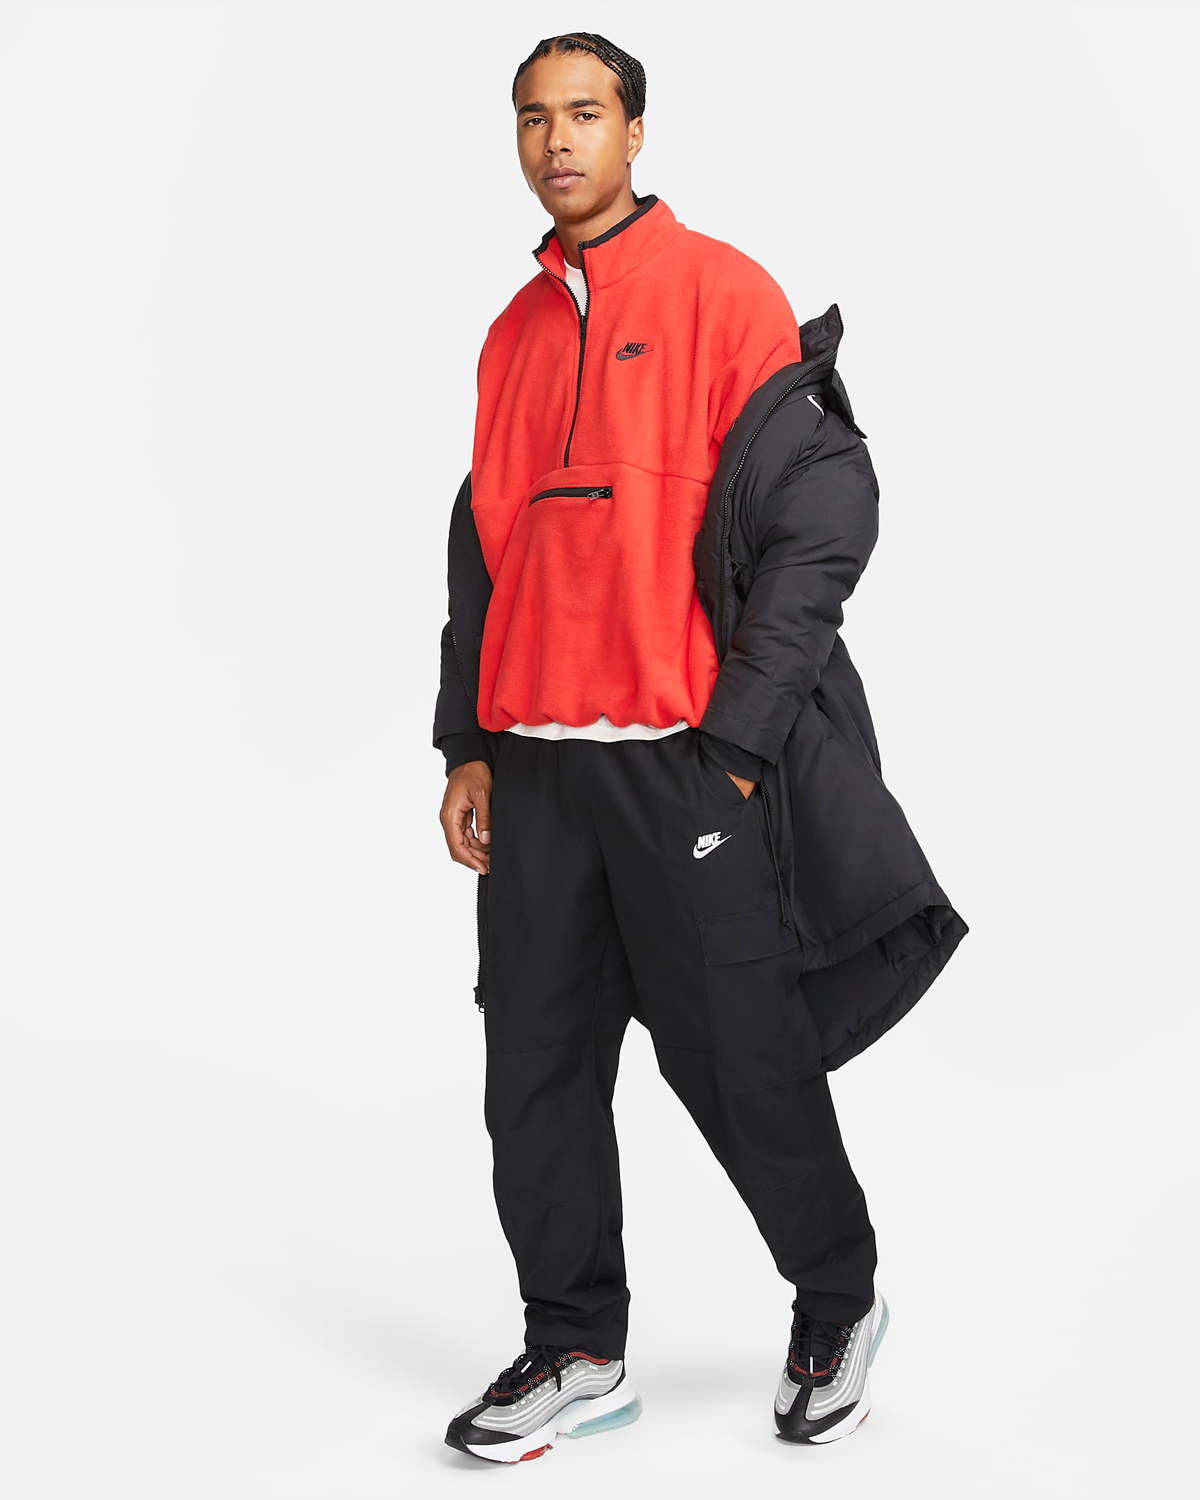 Nike-Club-Fleece-Half-Zip-Top-University-Red-Black-Outfit